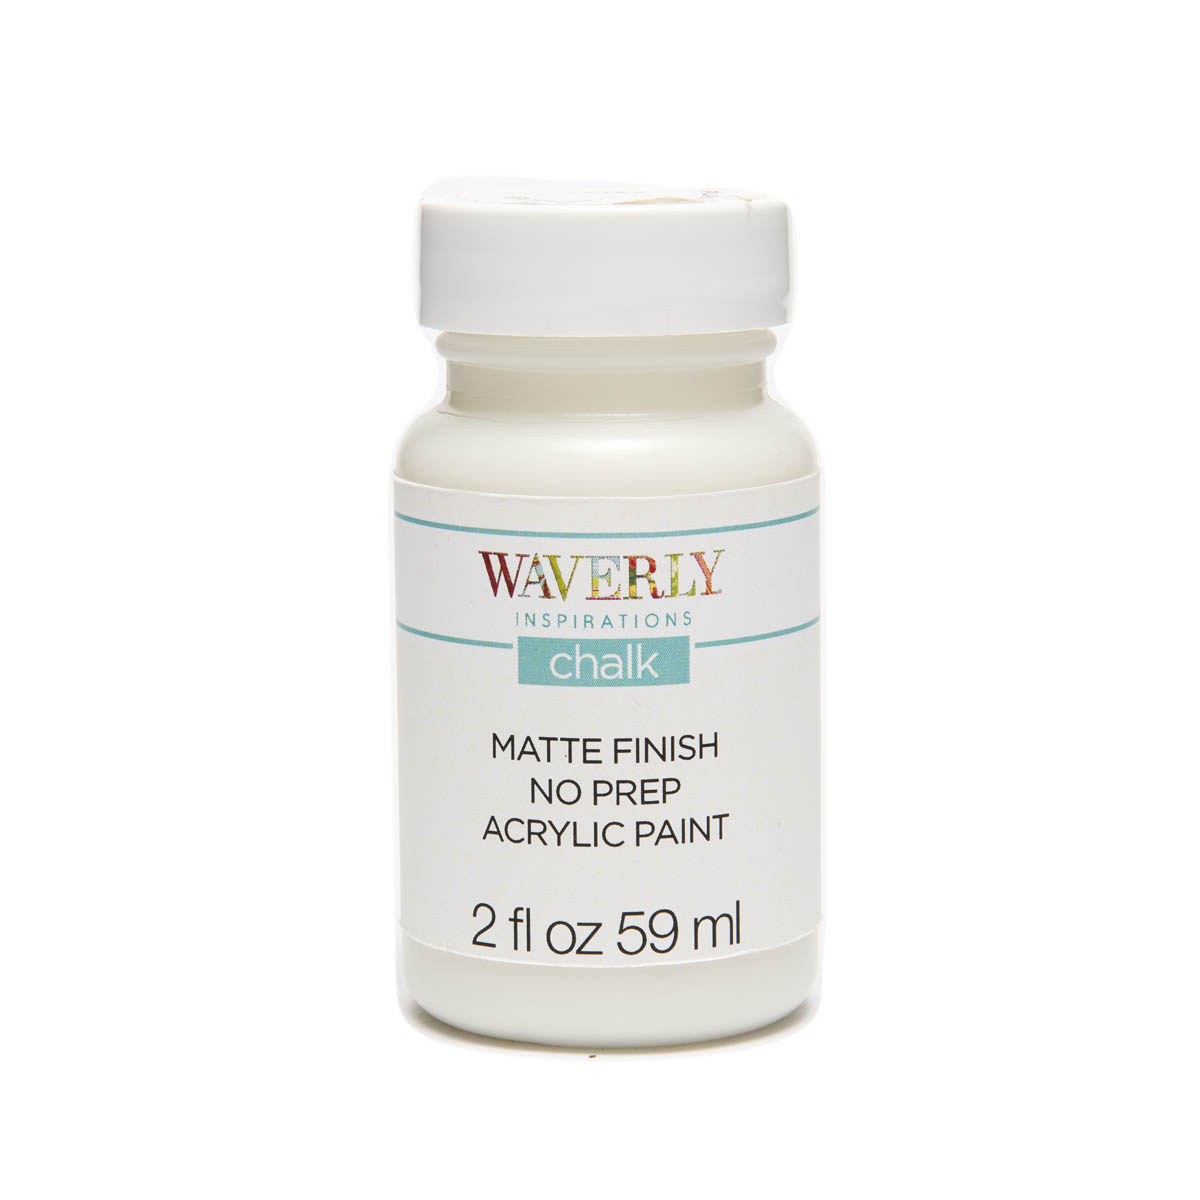 Waverly ® Inspirations Chalk Finish Acrylic Paint - Plaster, 2 oz. - 60737E